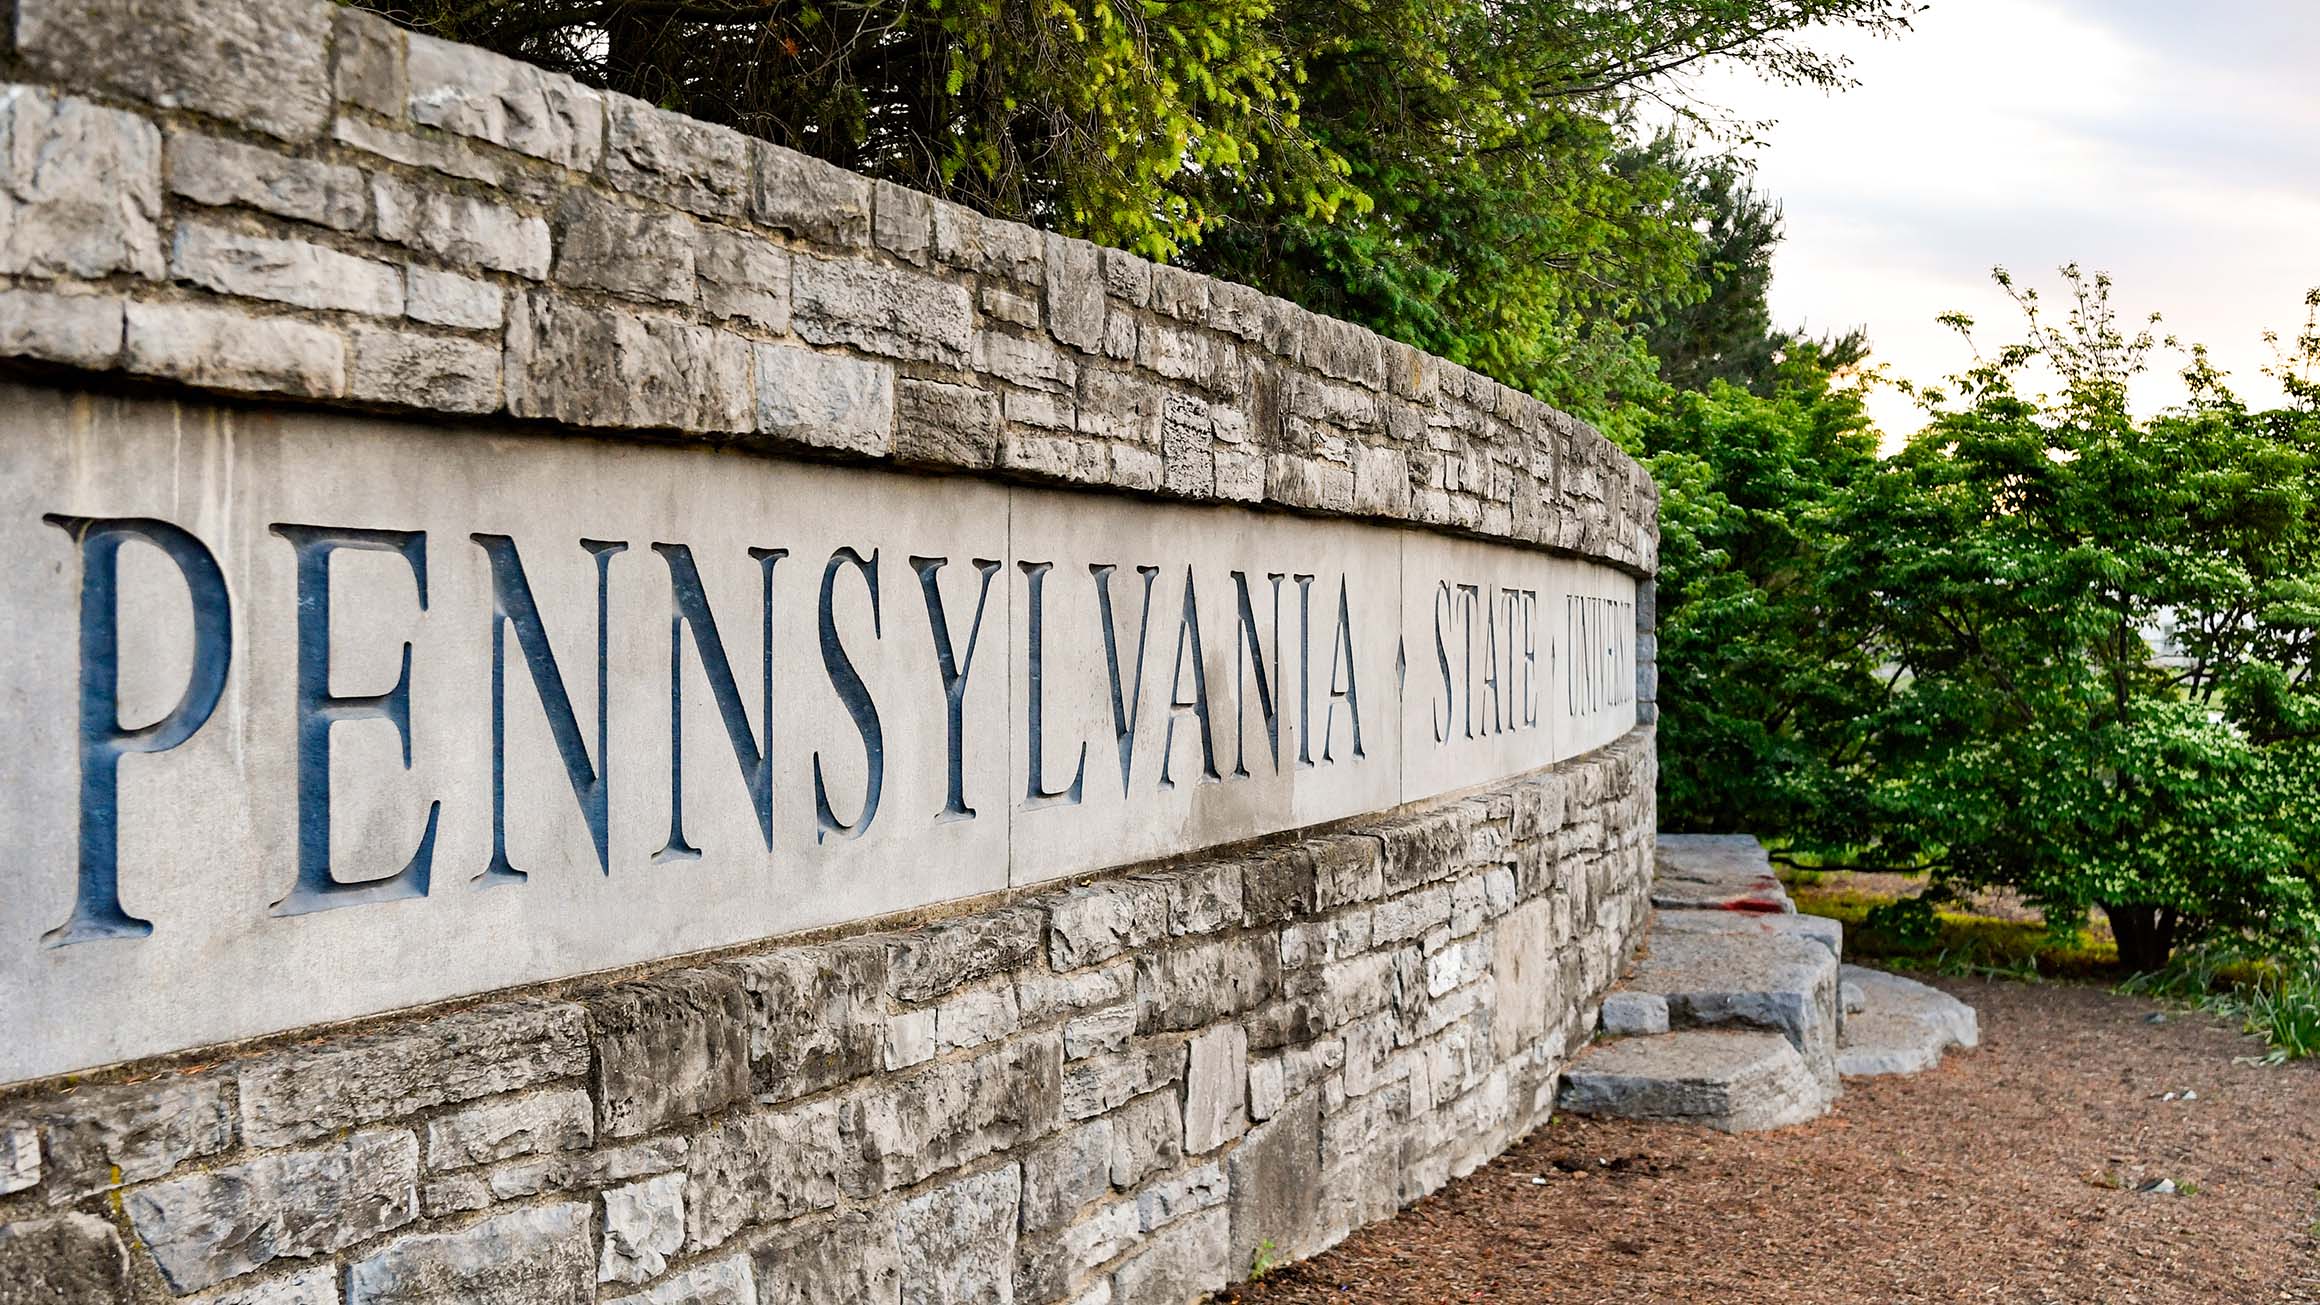 A stone sign reading Pennsylvania State University